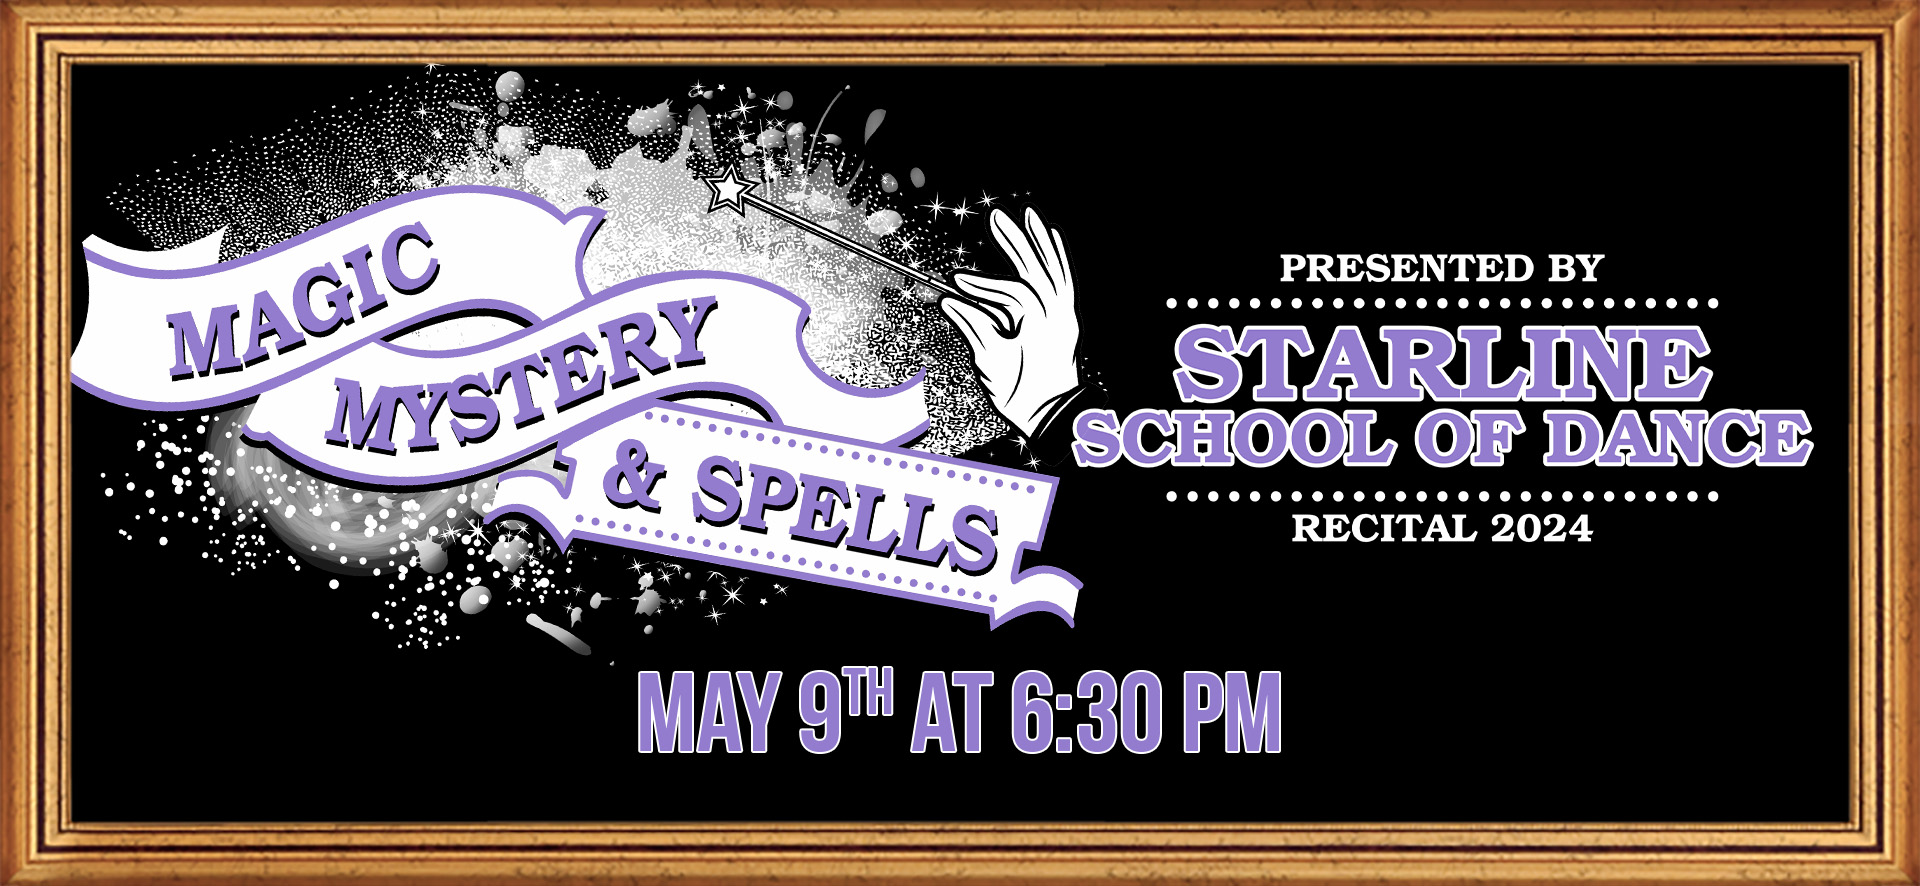 Starline School of Dance presents "Magic Mystery & Spells"